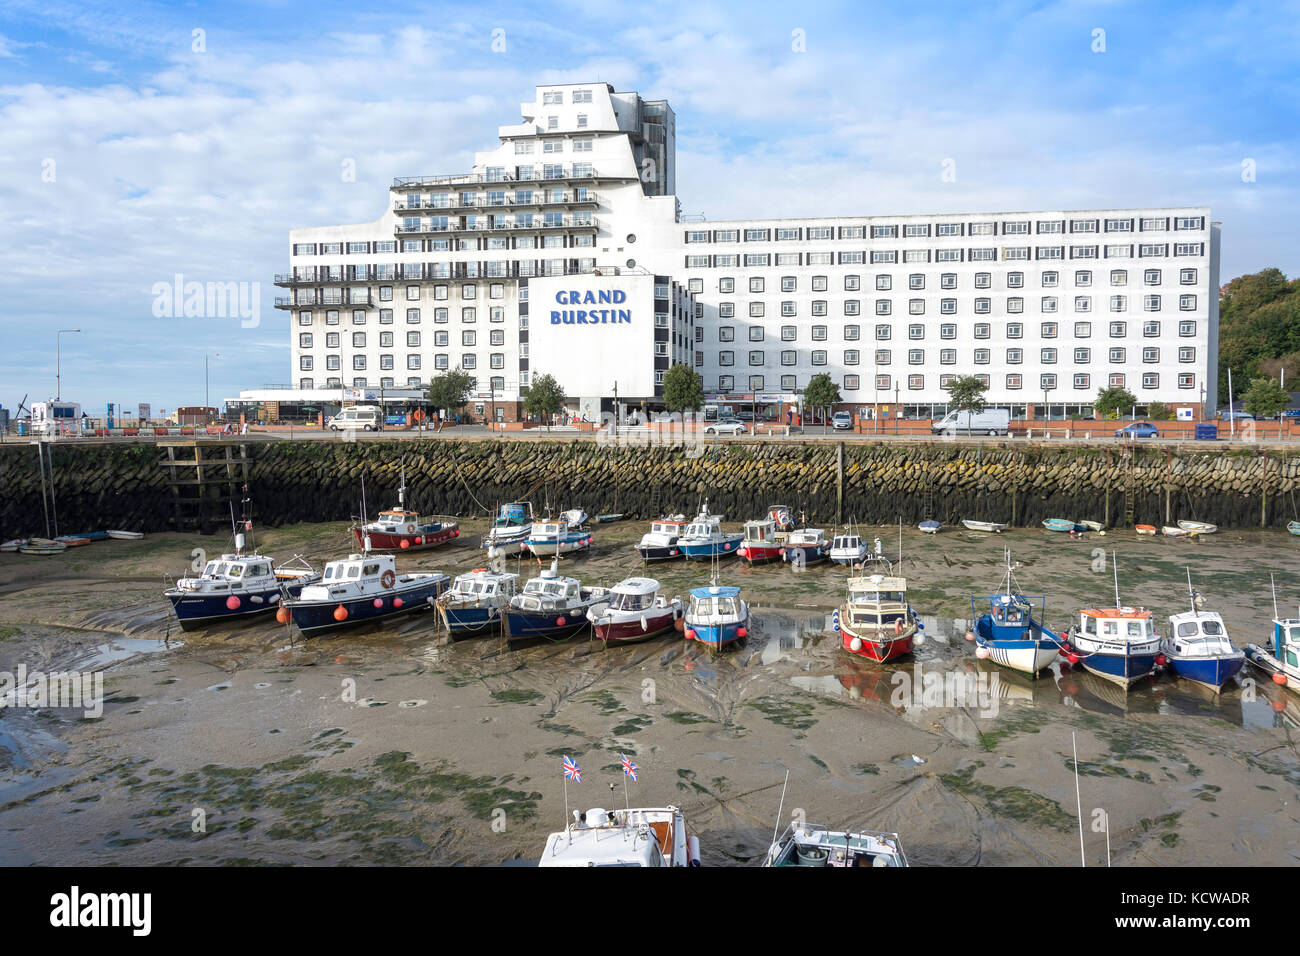 Grand Burstin Hotel, Marine Parade, The Harbour, Folkestone, Kent, England, United Kingdom Stock Photo